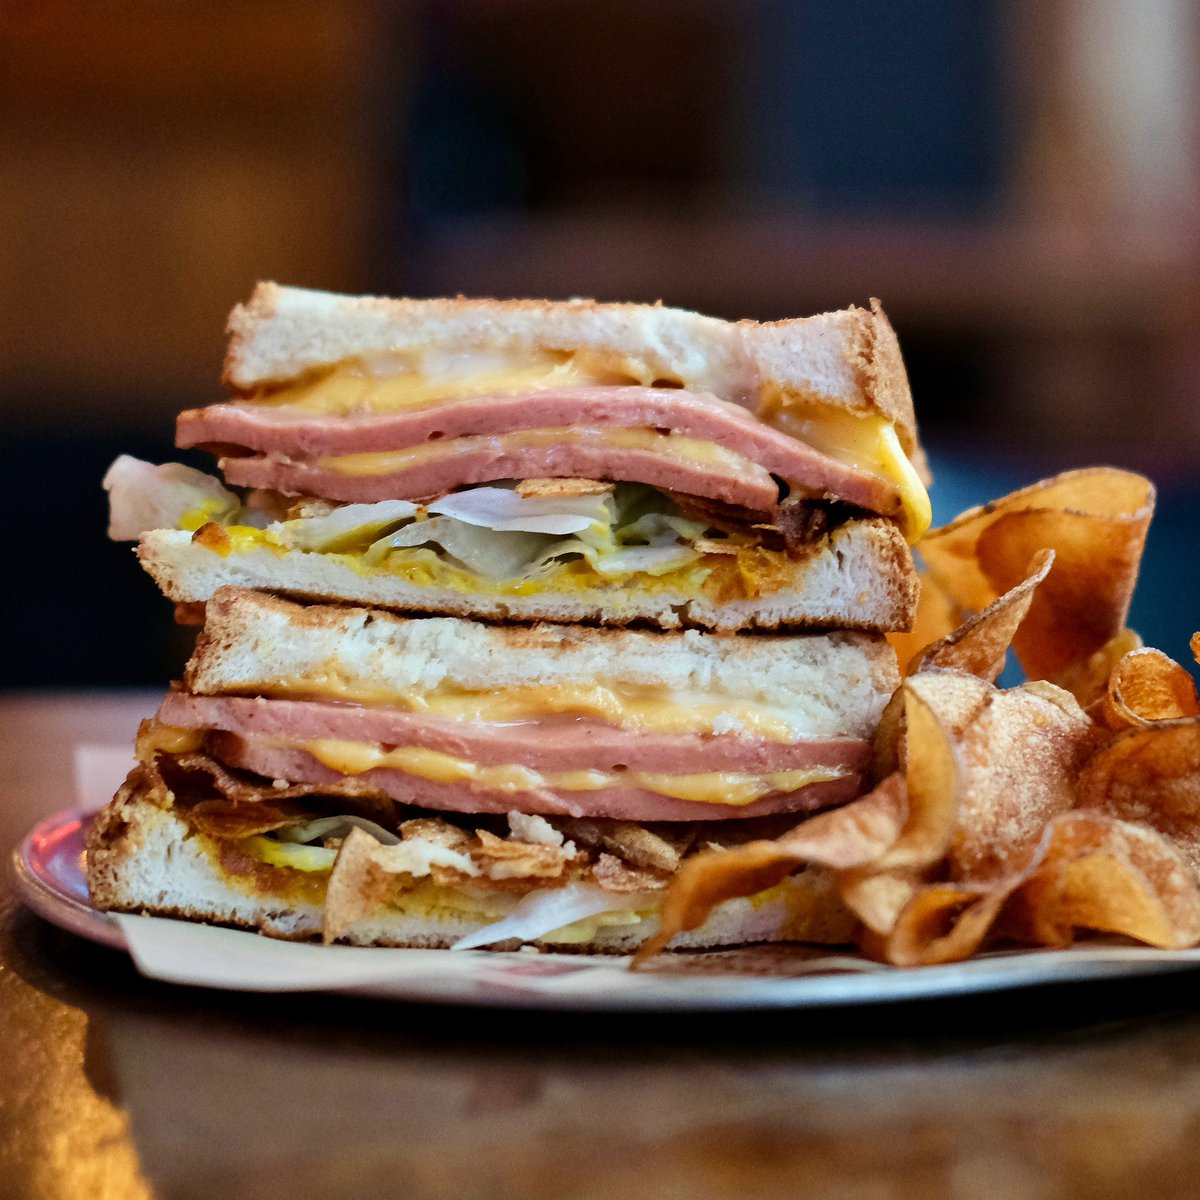 The Fried Bologna Sandwich at @Carols_Chicago. 📸

#chicago #chicagoeats #chicagofood #chicagofoodie #photography #photo #chicagofoodscene #chicagobars #friedbologna #sandwich #eeeeeats